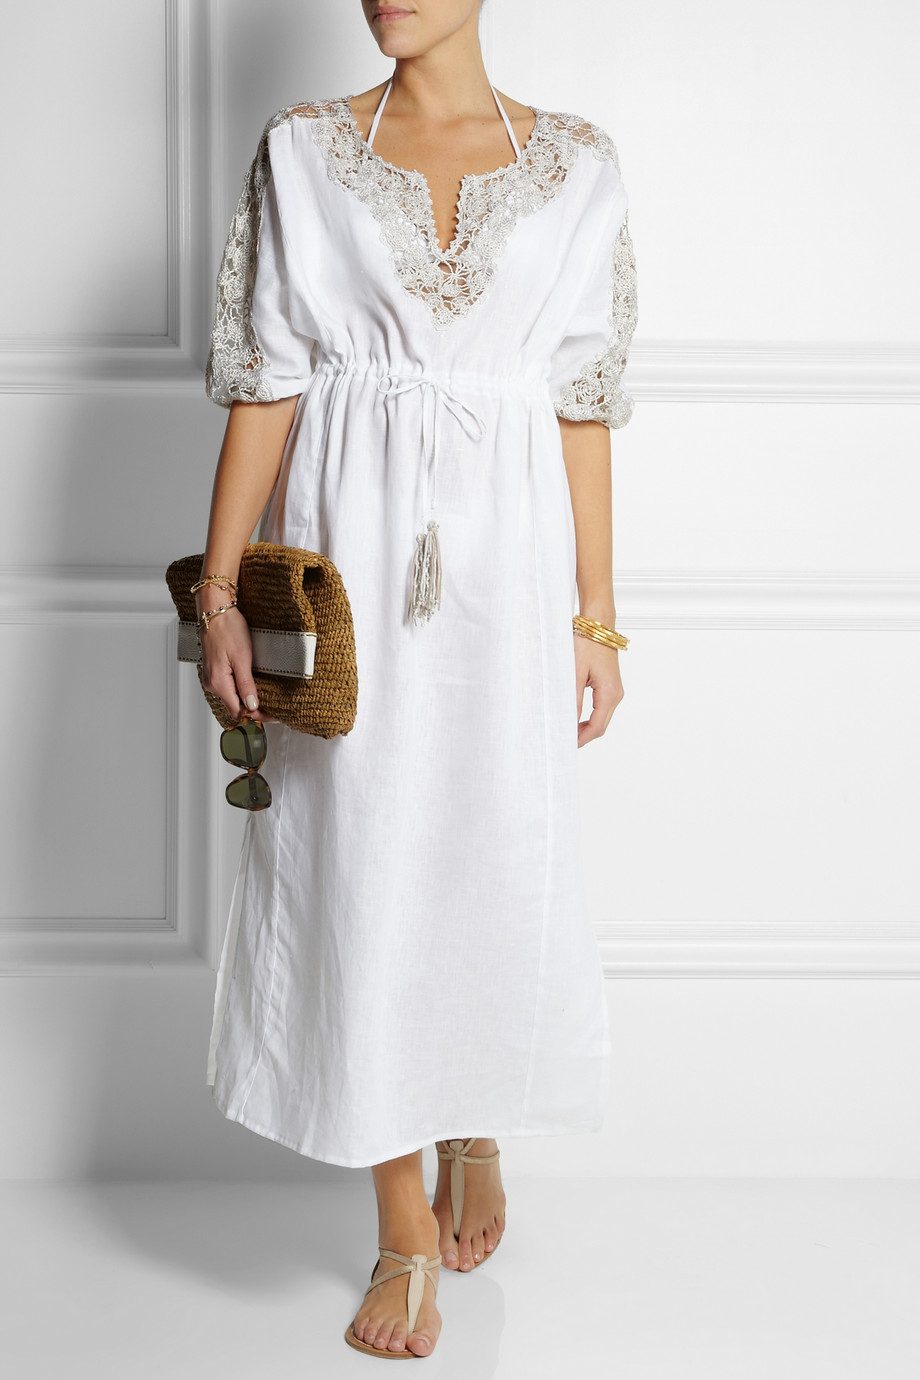 Lyst - Emamó Embellished Crocheted Linen Beach Dress in White